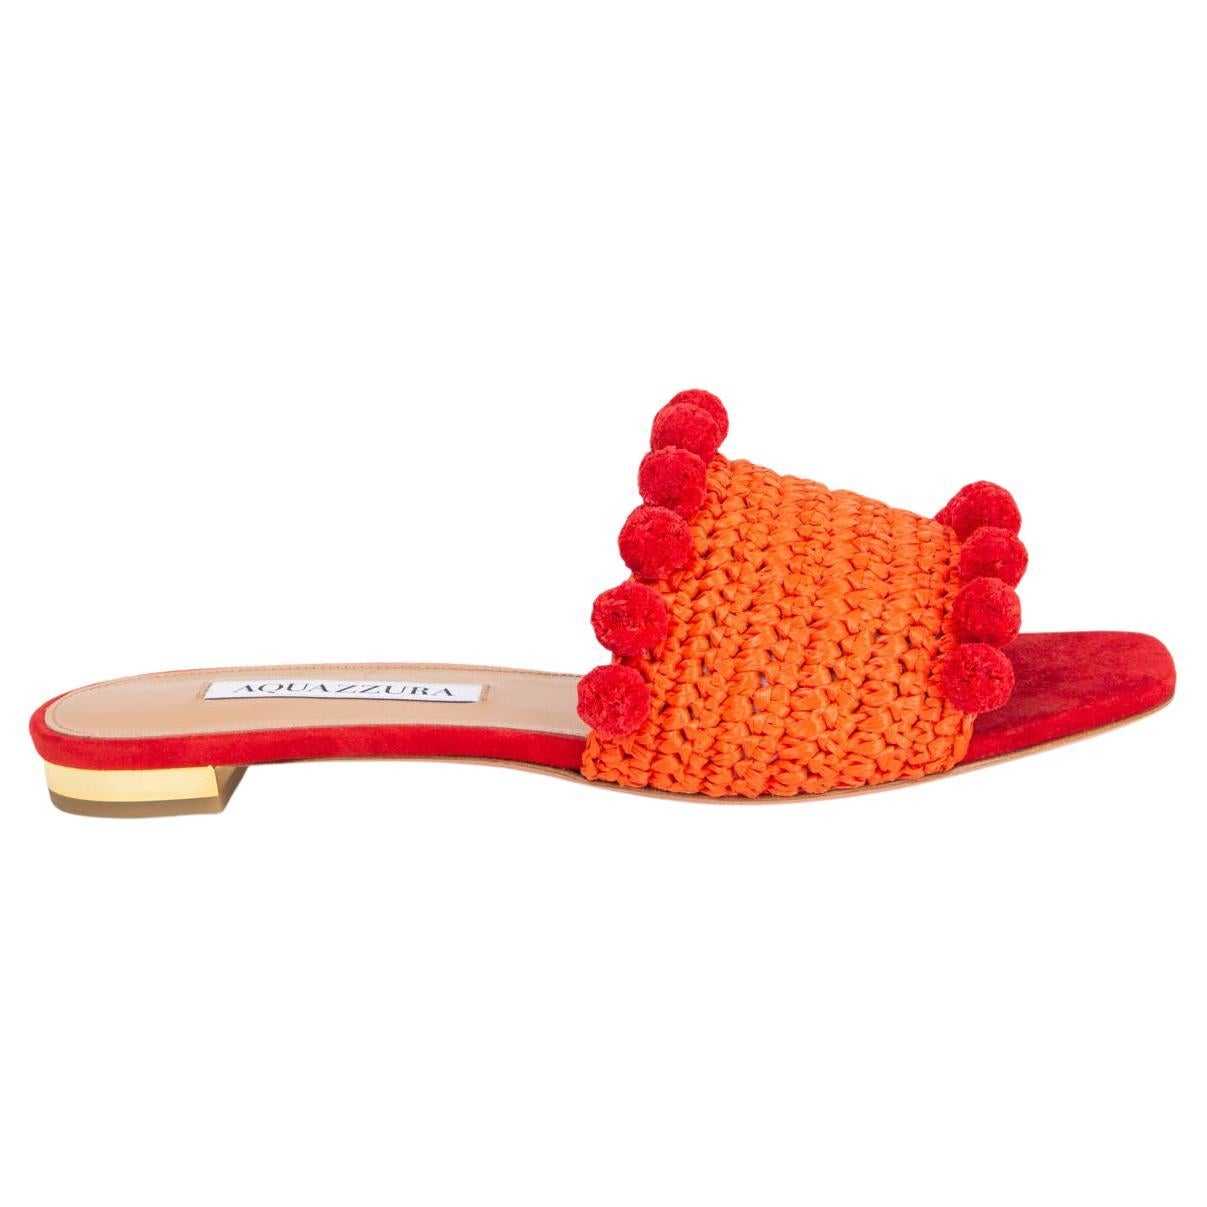 Chaussures plates RAFFIA POMPOM AQUAZZURA rouge orange avec talons 37,5